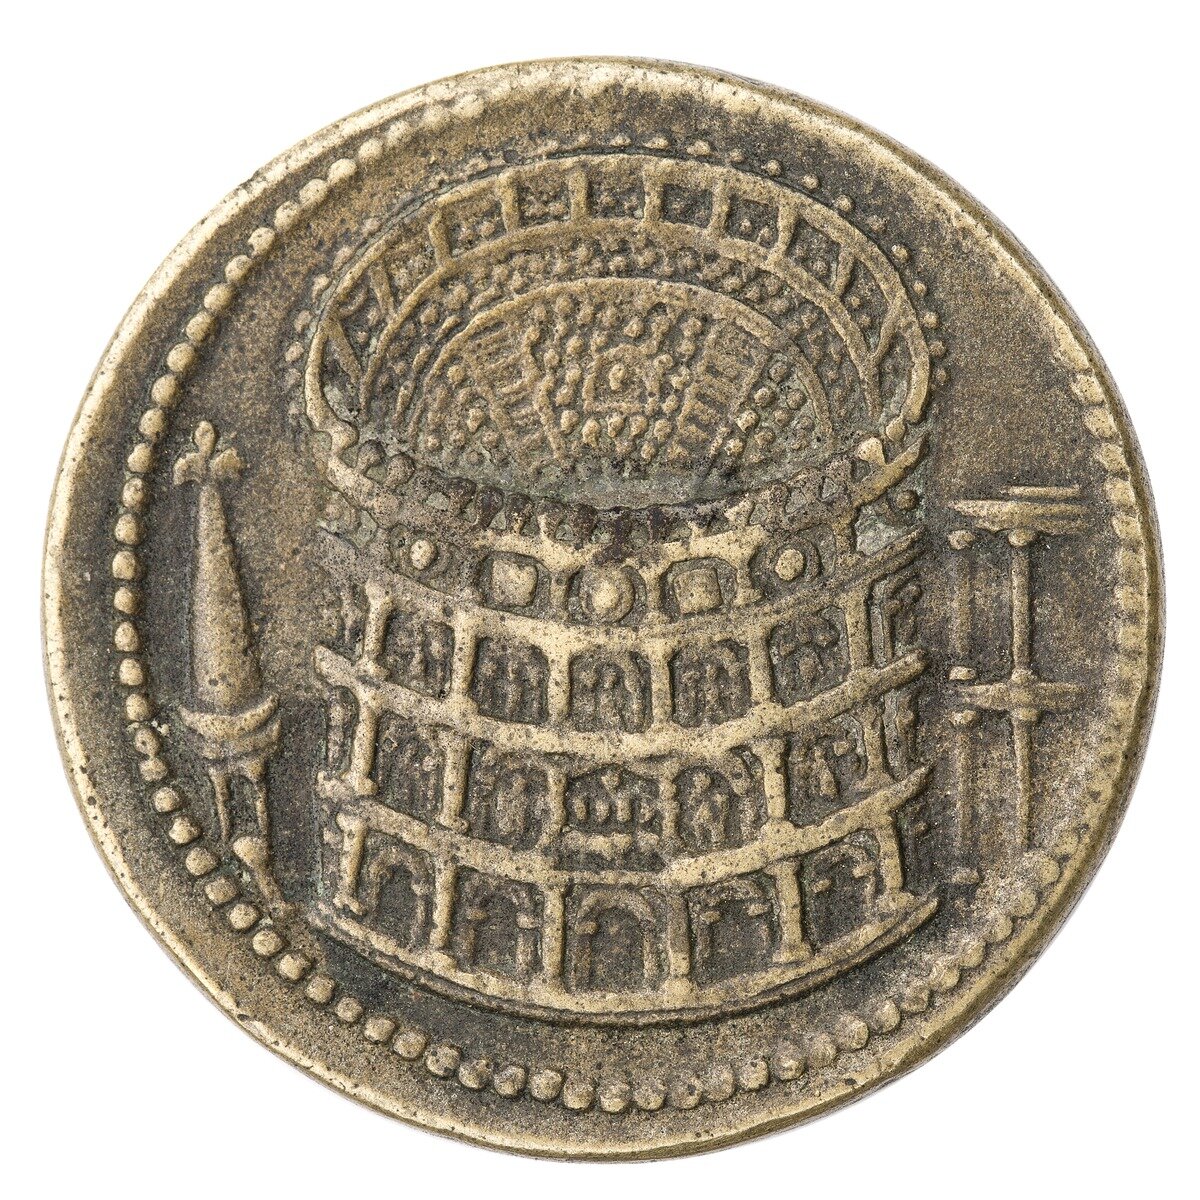 Колизей на древнеримской монете 80 года